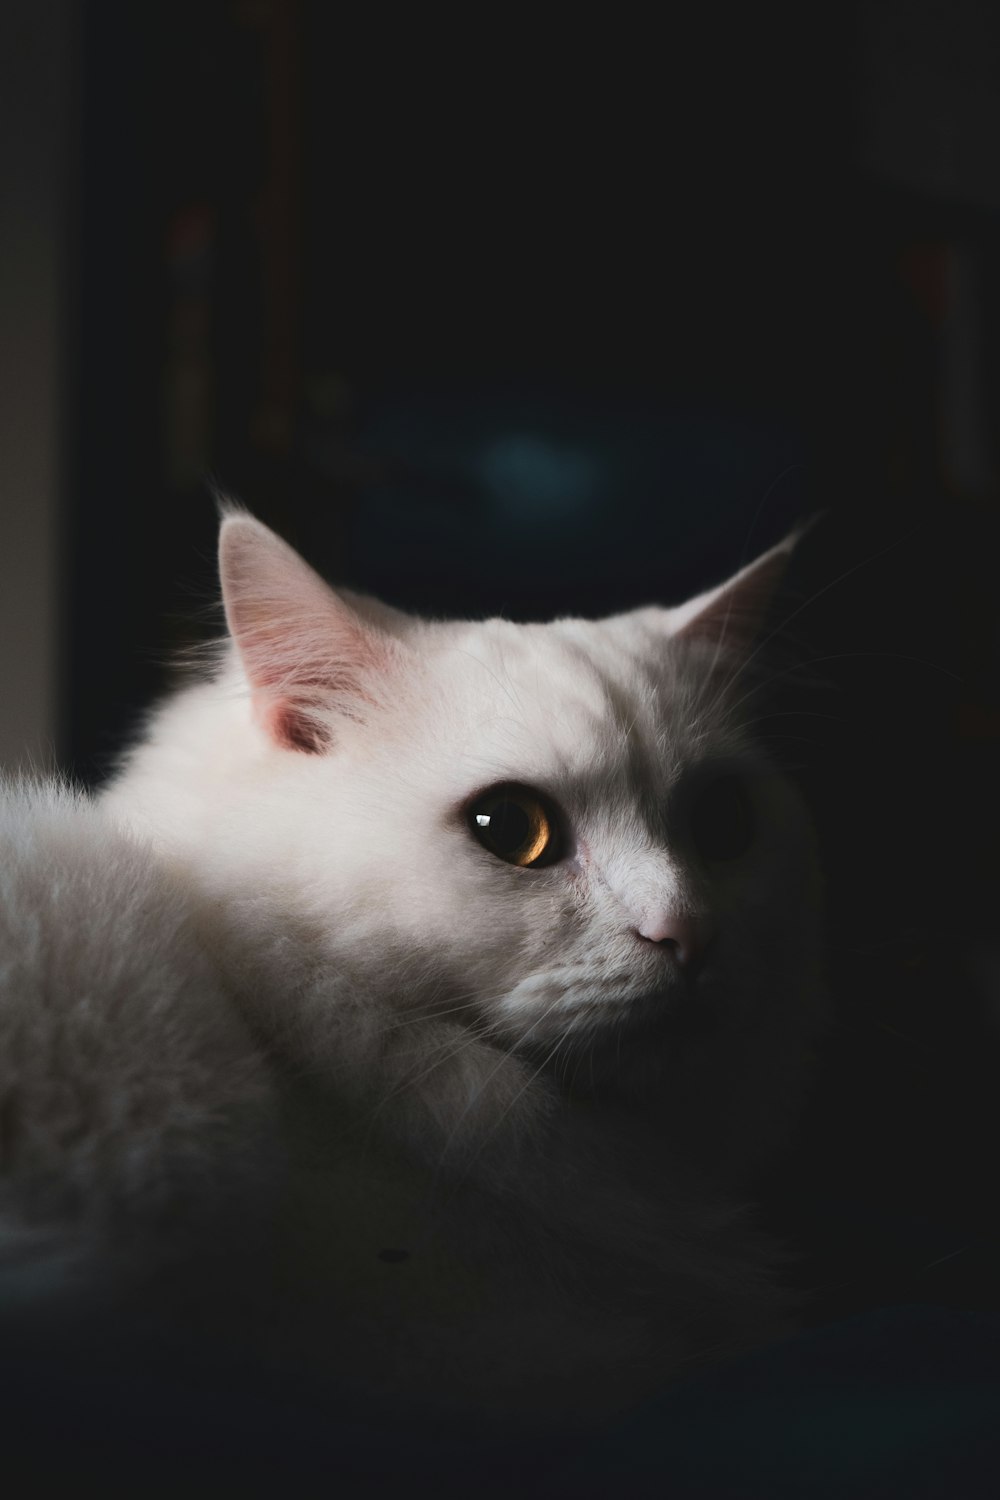 white cat on black background